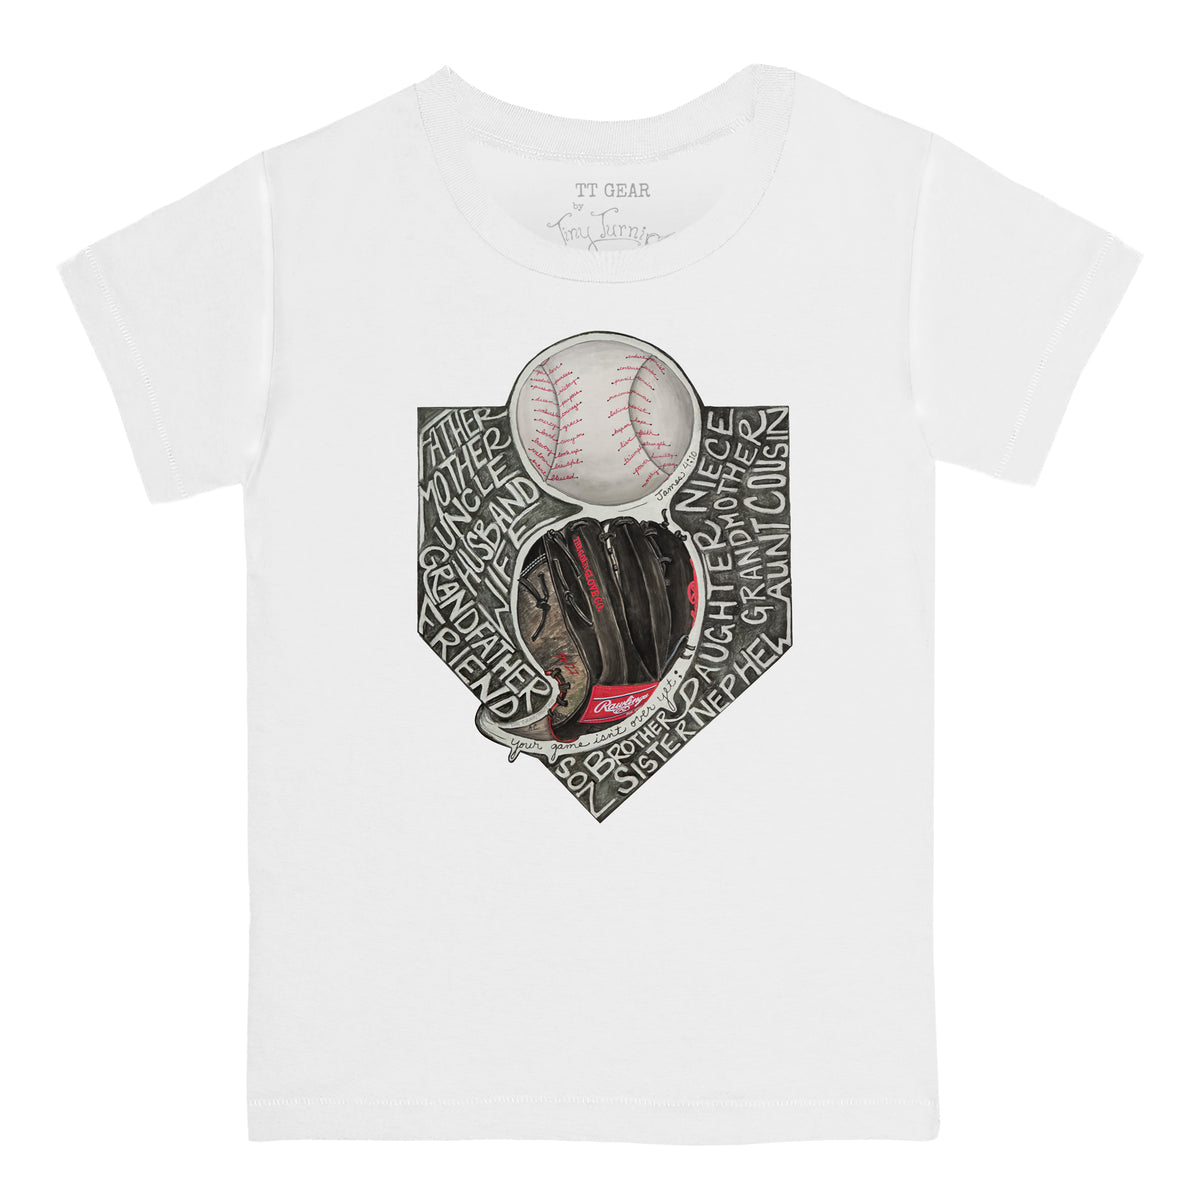 Toronto Blue Jays Tiny Turnip Women's Blooming Baseballs T-Shirt